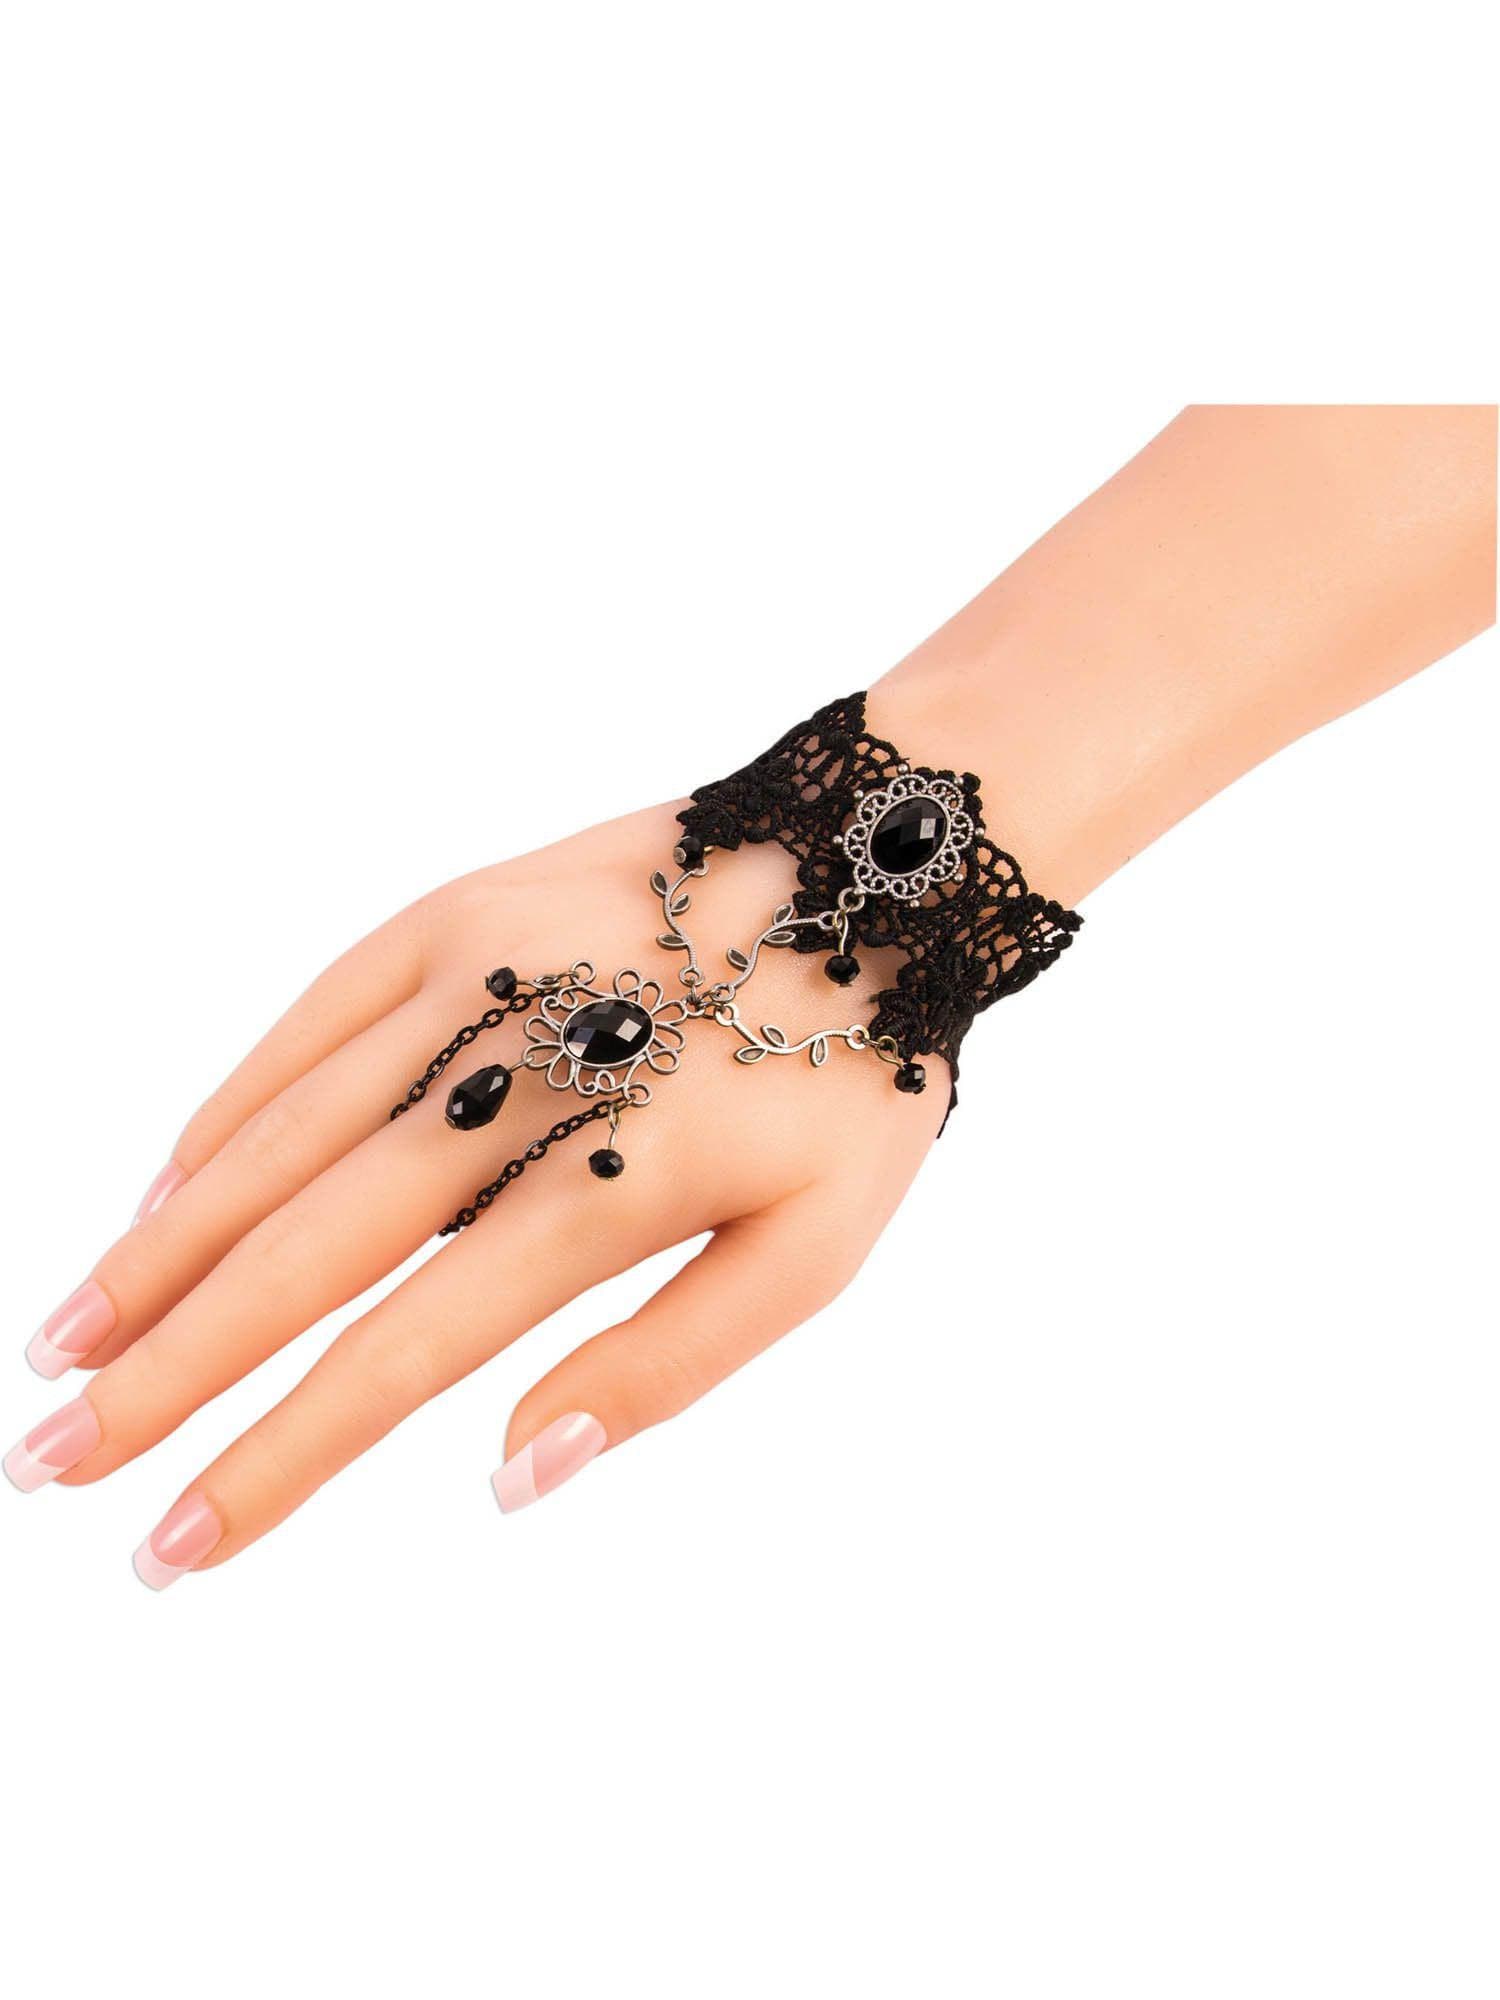 Dark Monarch Hand Jewelry - costumes.com